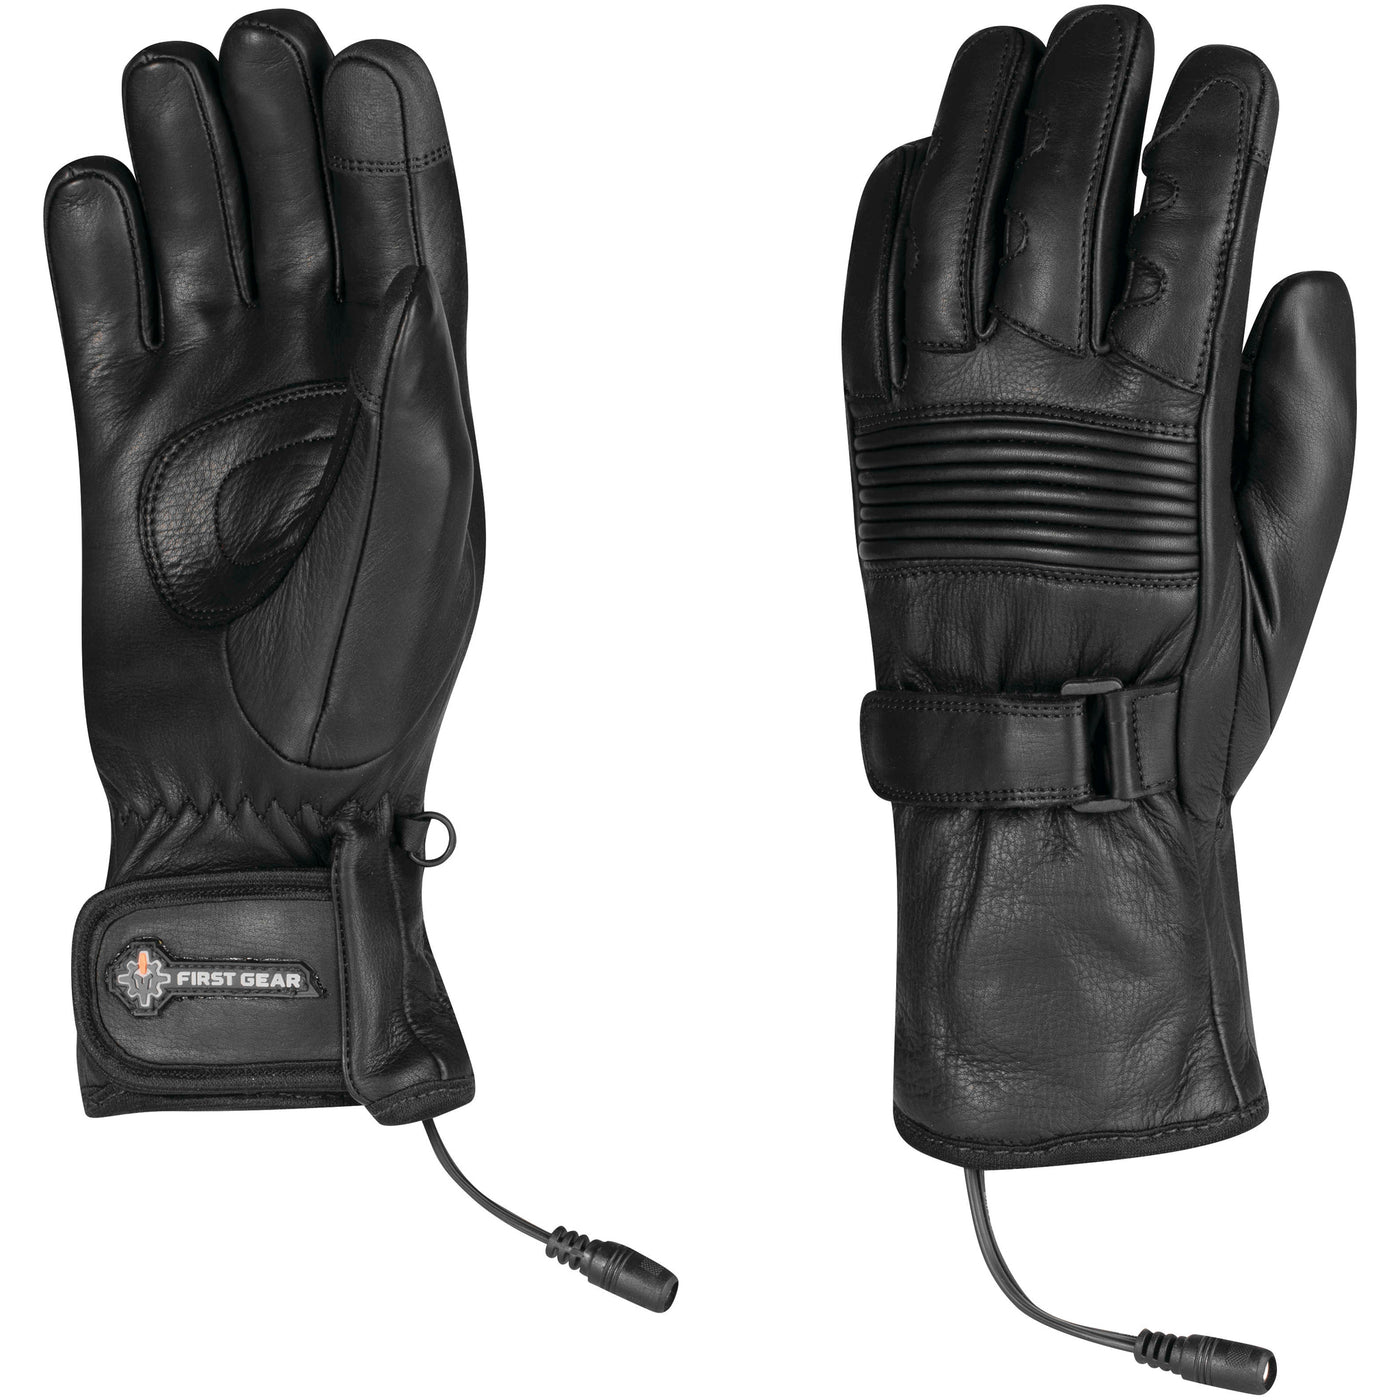 Firstgear Heated Rider I-touch Glove